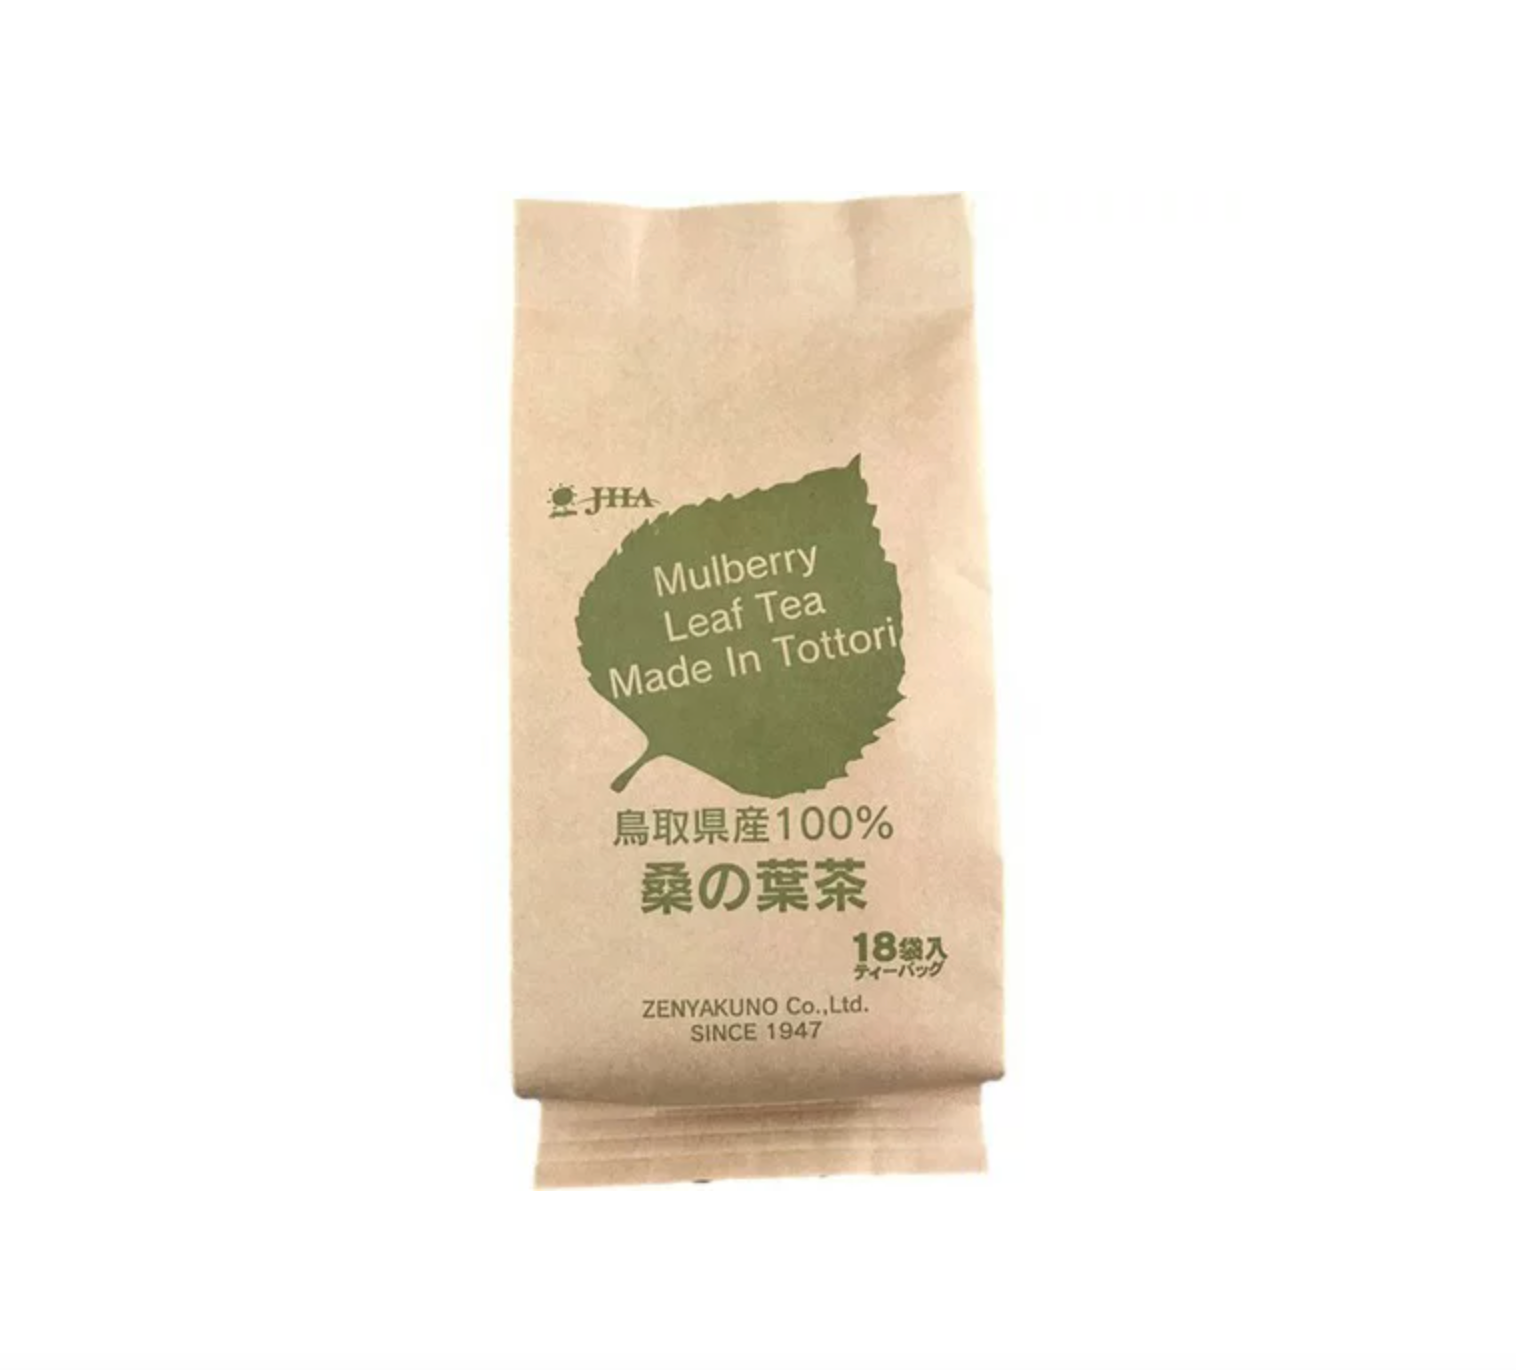 Zenyakuno Mulberry Leaf Tea 30 Bags - Made In Tottori - Organic Mulberry Leaf Tea